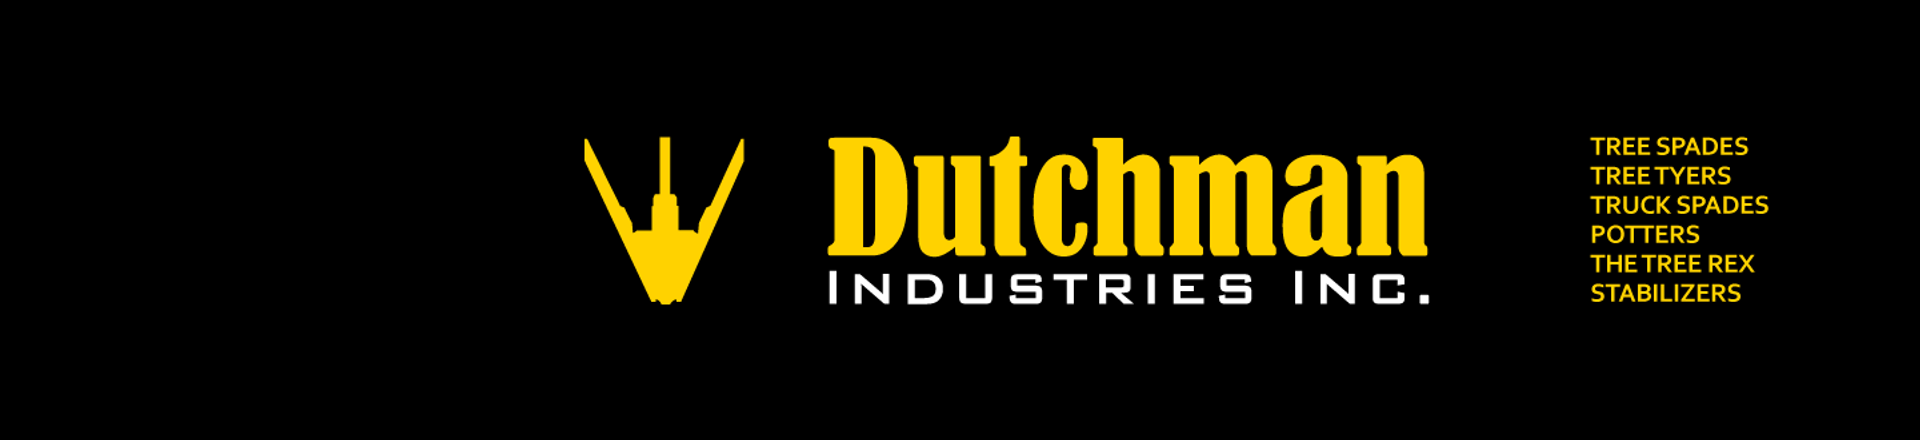 Dutchman Industries Inc